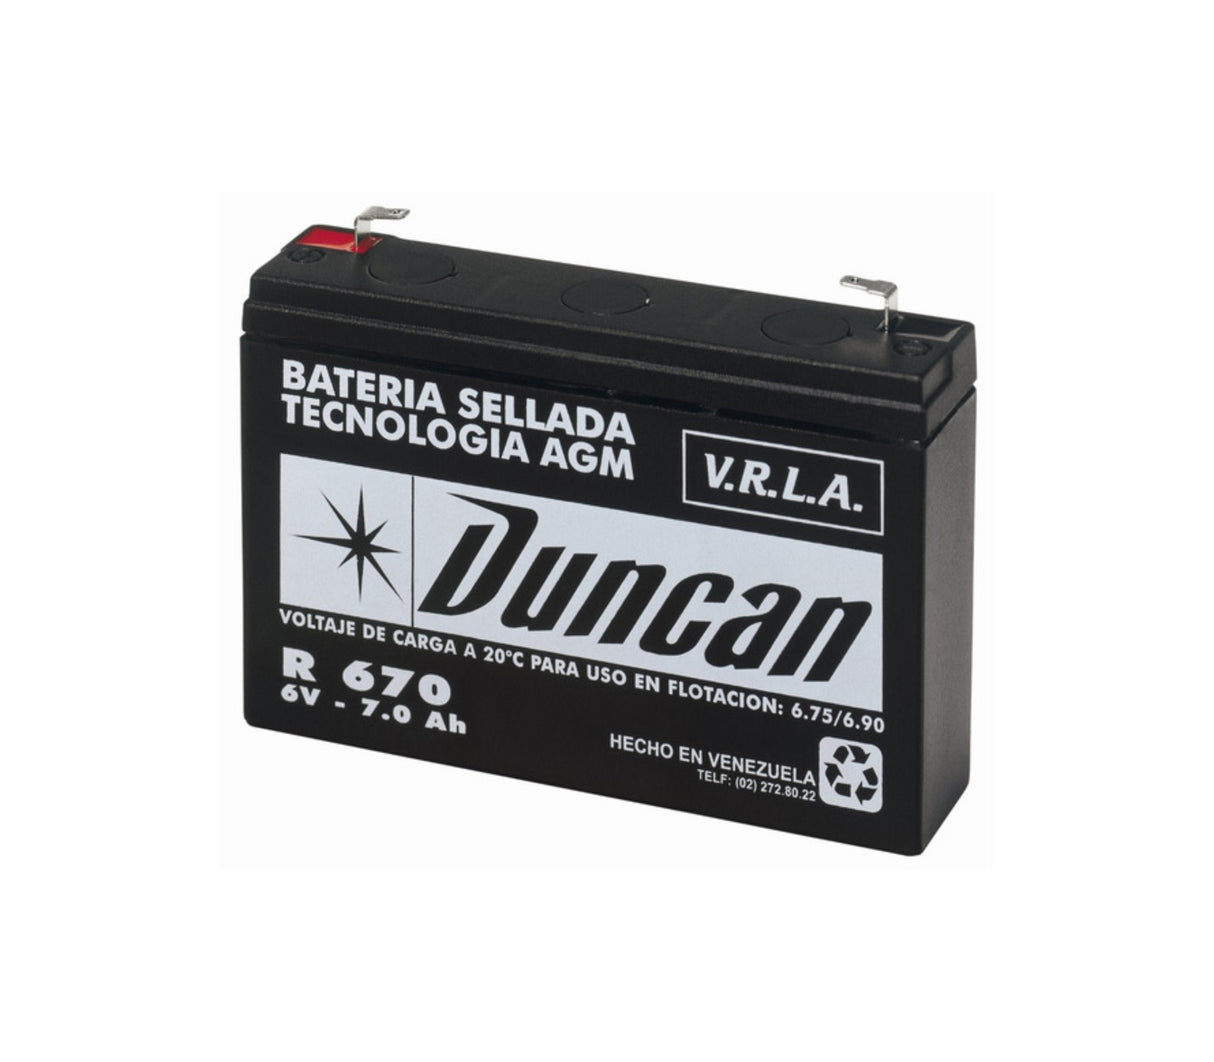 Batería AGM gel R-670 Duncan